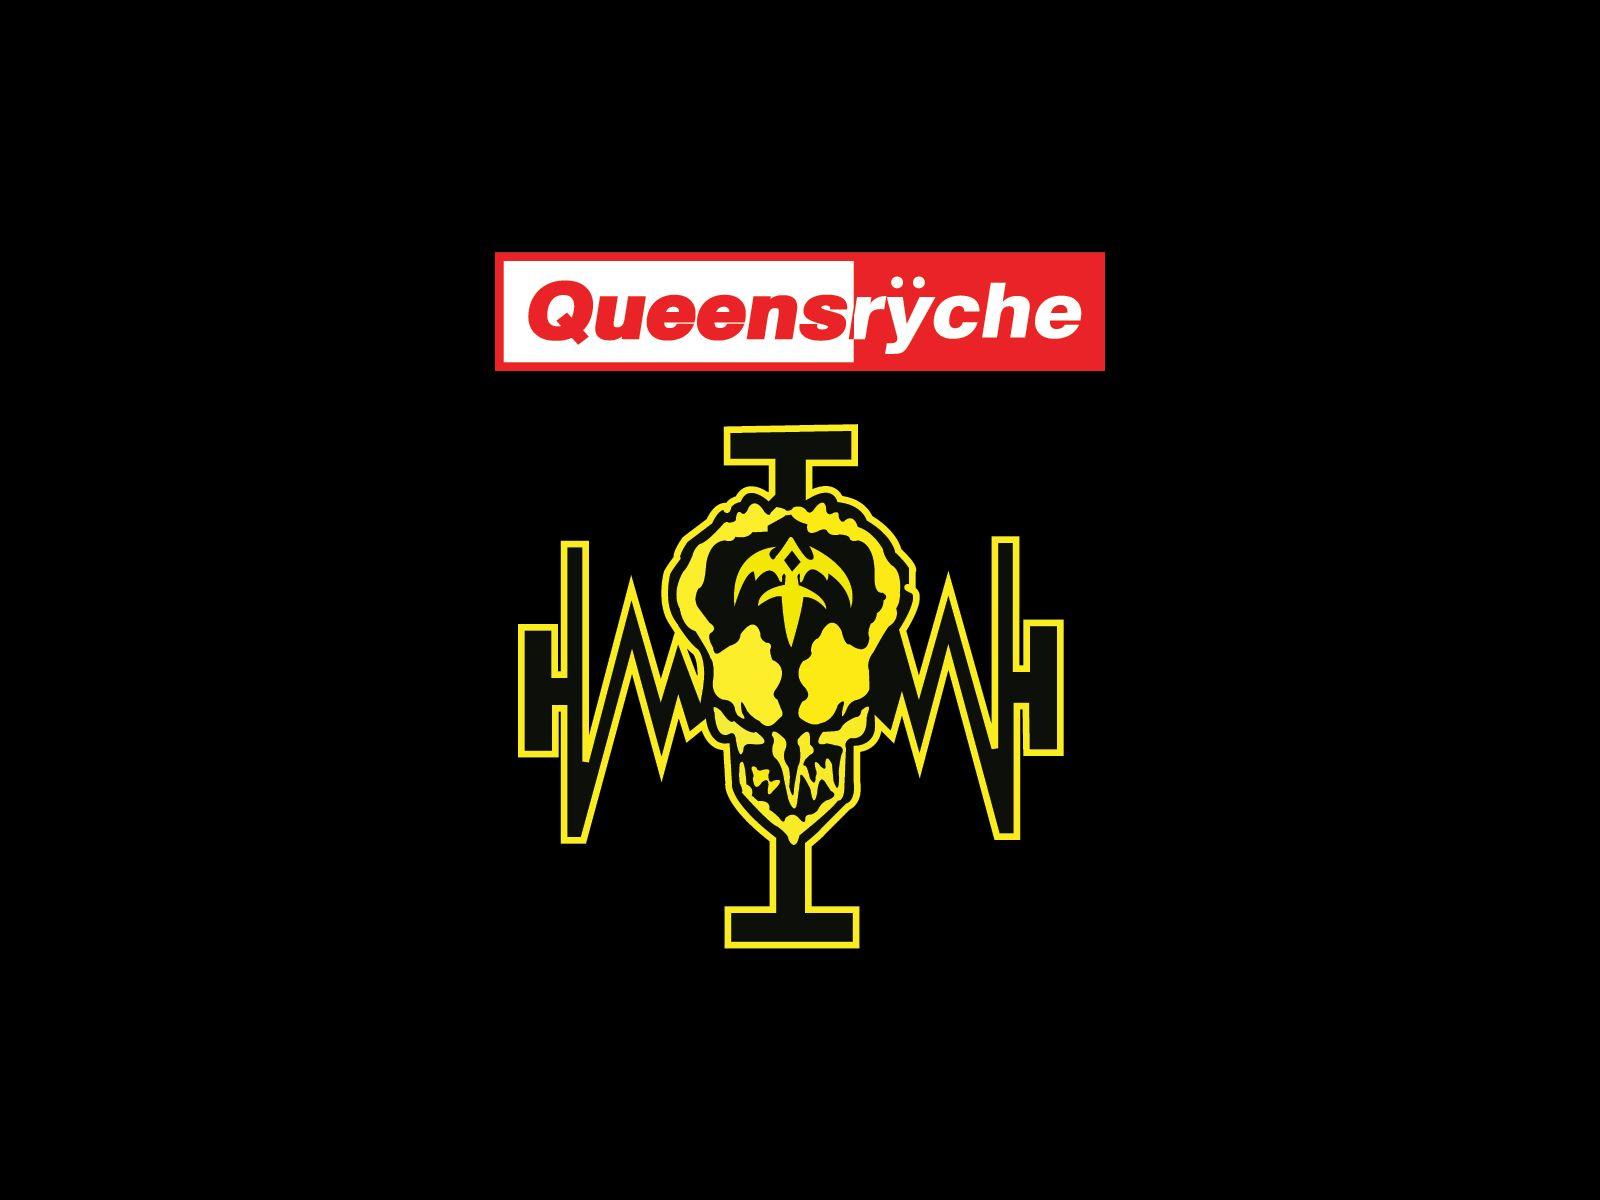 Queensryche Logo - Queensryche band logo and wallpaper. Band logos band logos